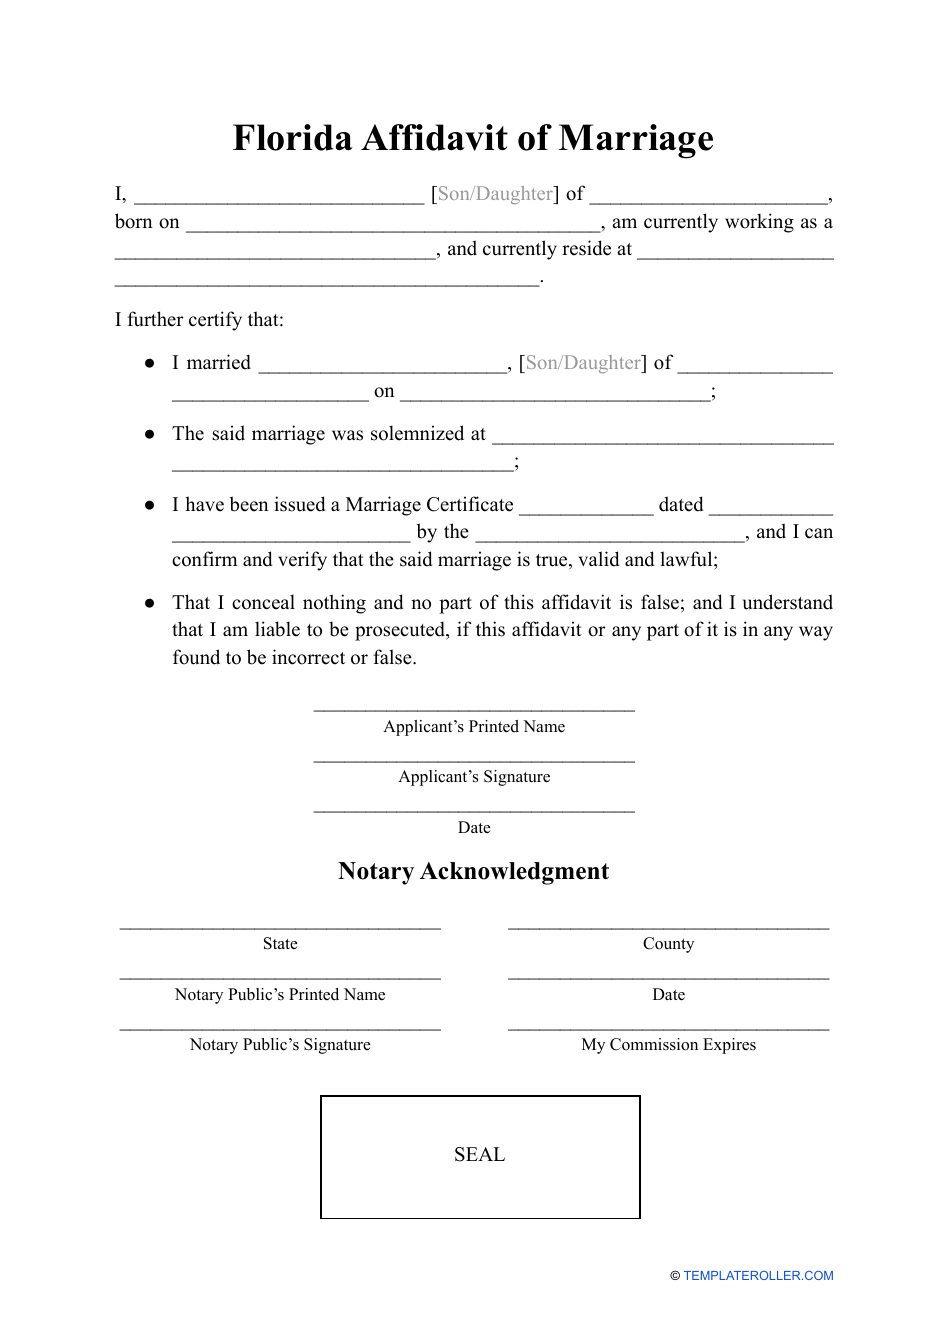 Affidavit of Marriage - Florida, Page 1